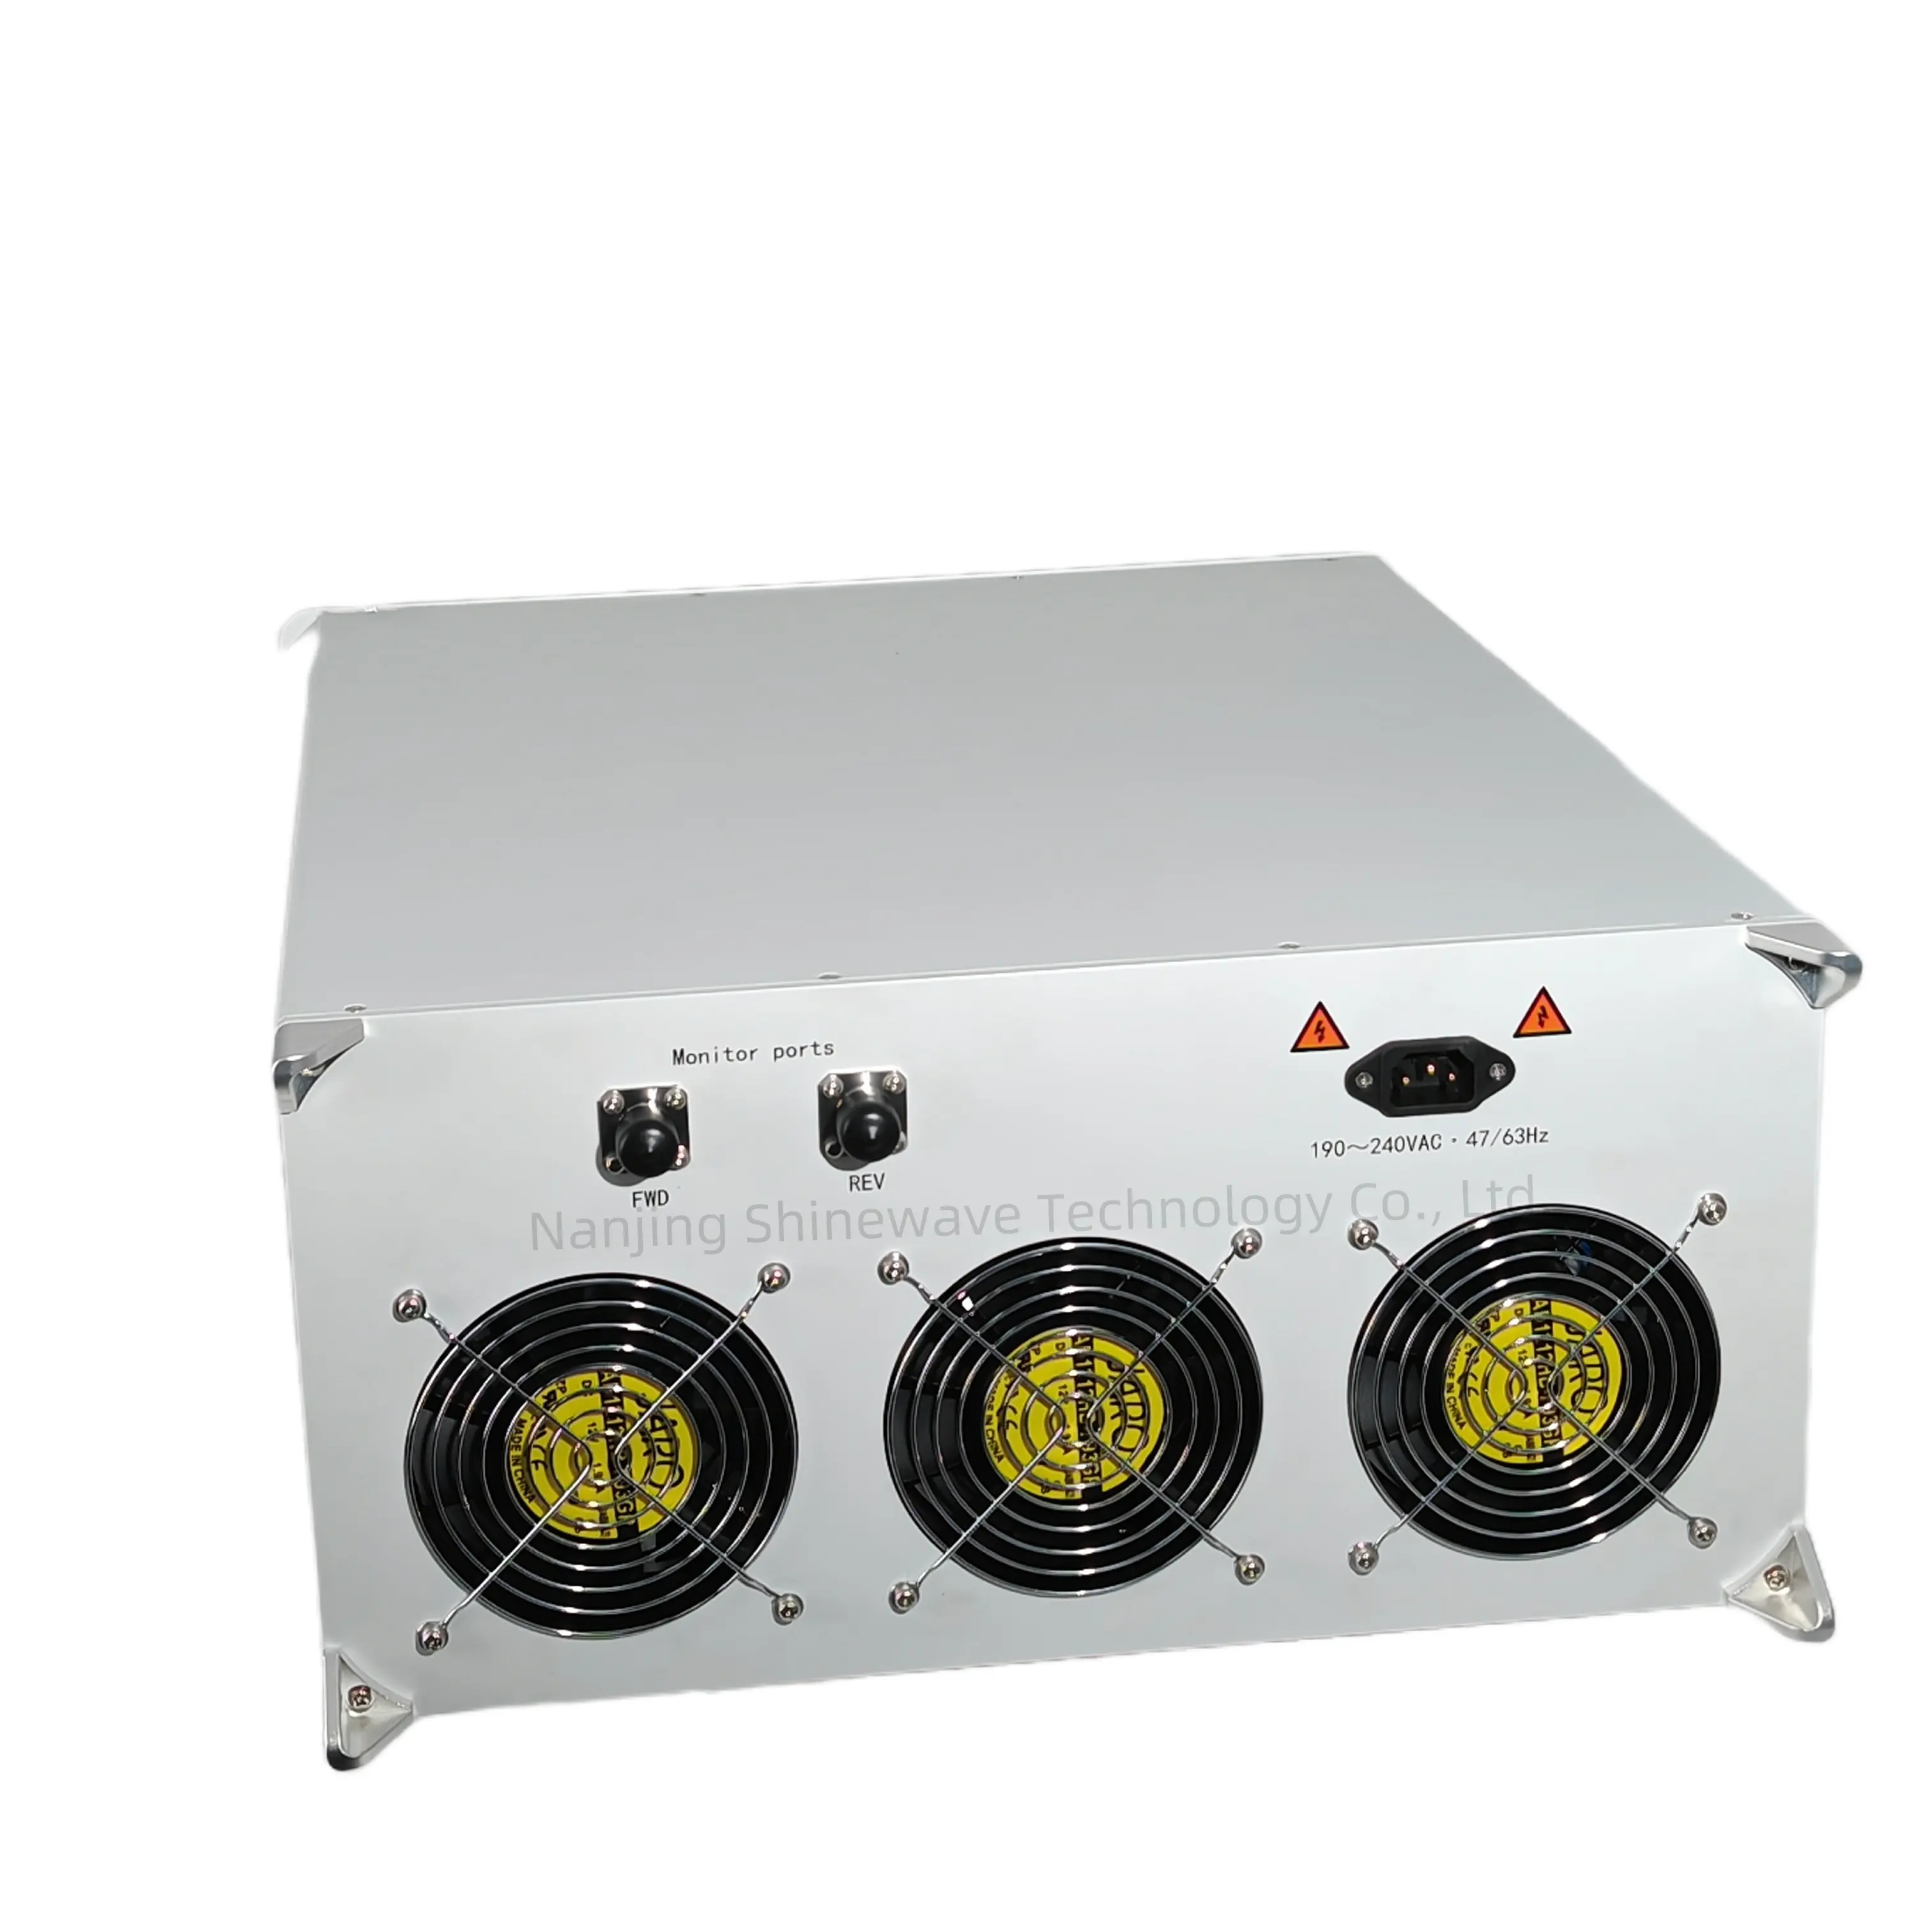 Sistem Amplifier RF 6-18 GHz 120W, kotak penguat daya Ultra Wideband daya tinggi performa tinggi untuk uji dan pengukuran